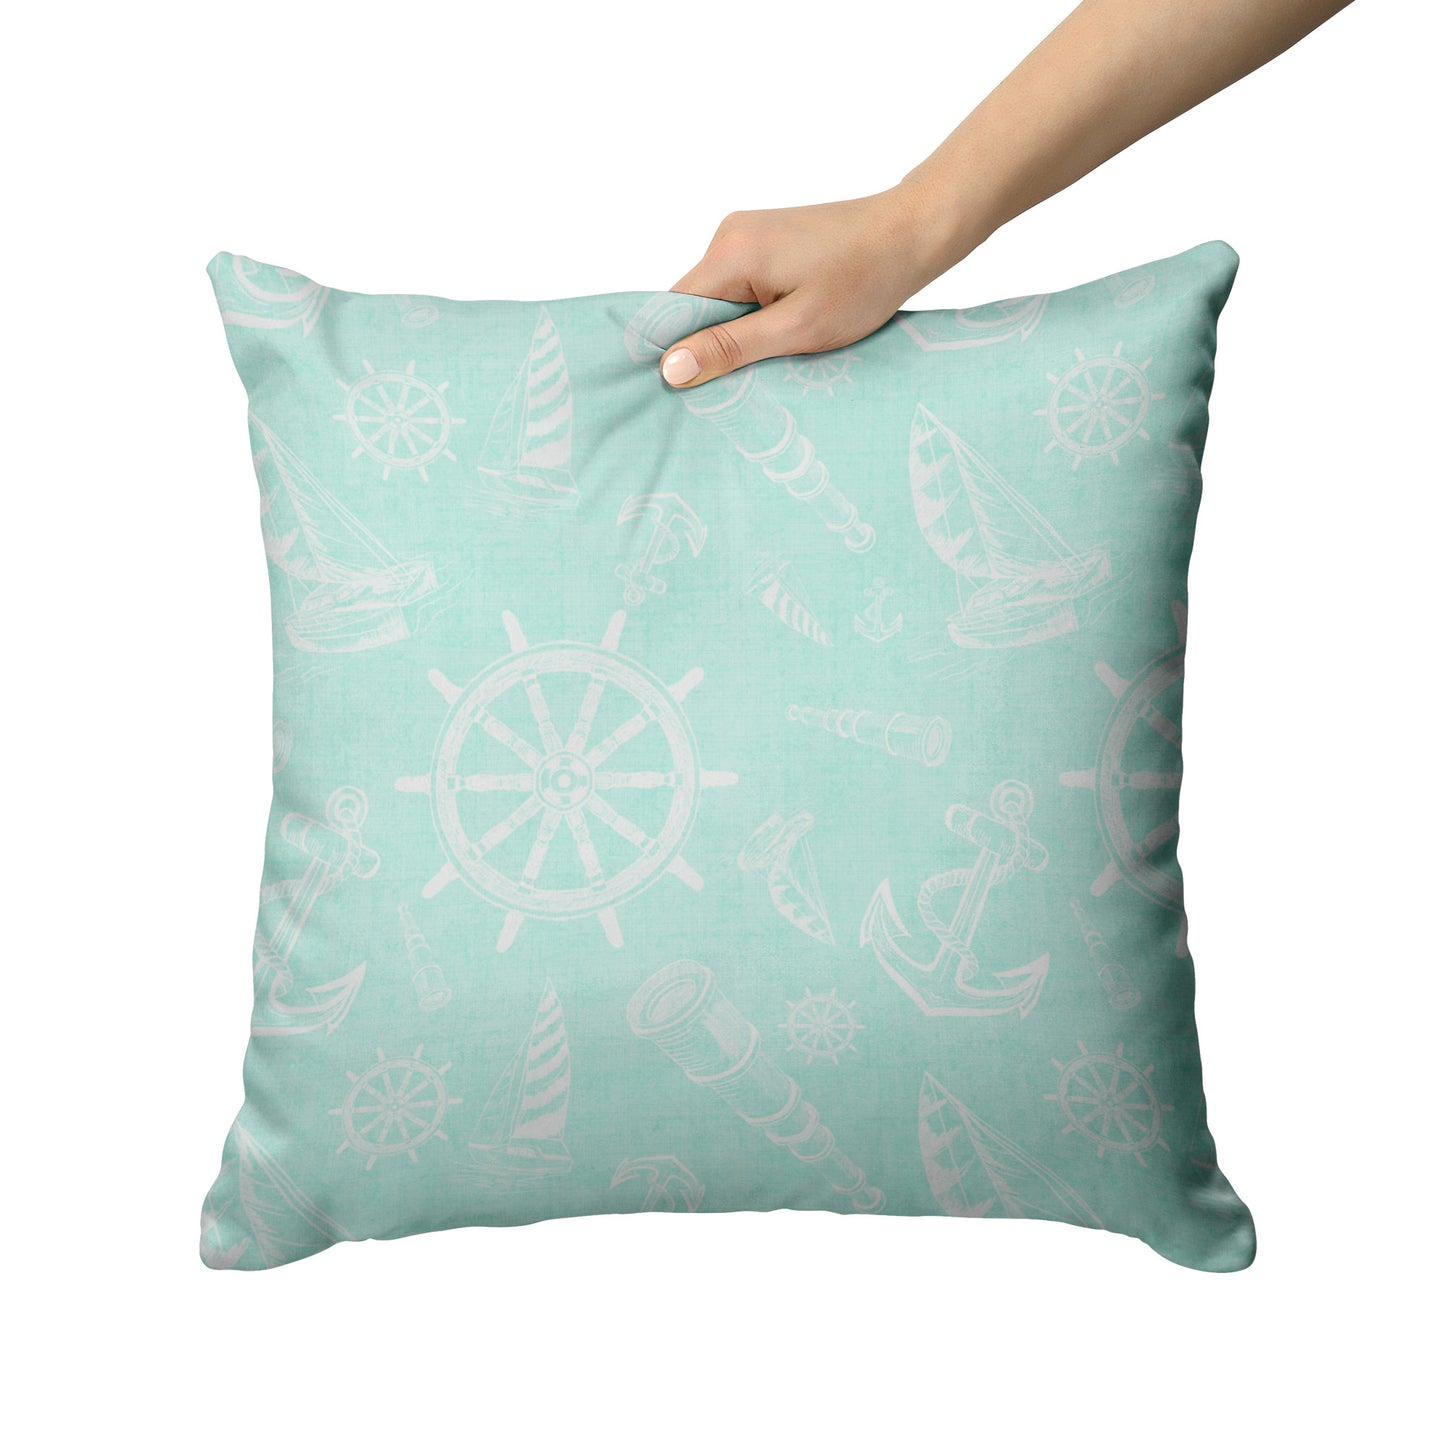 Nautical Sketches Design on Mint Linen Textured Background, Throw Pillow